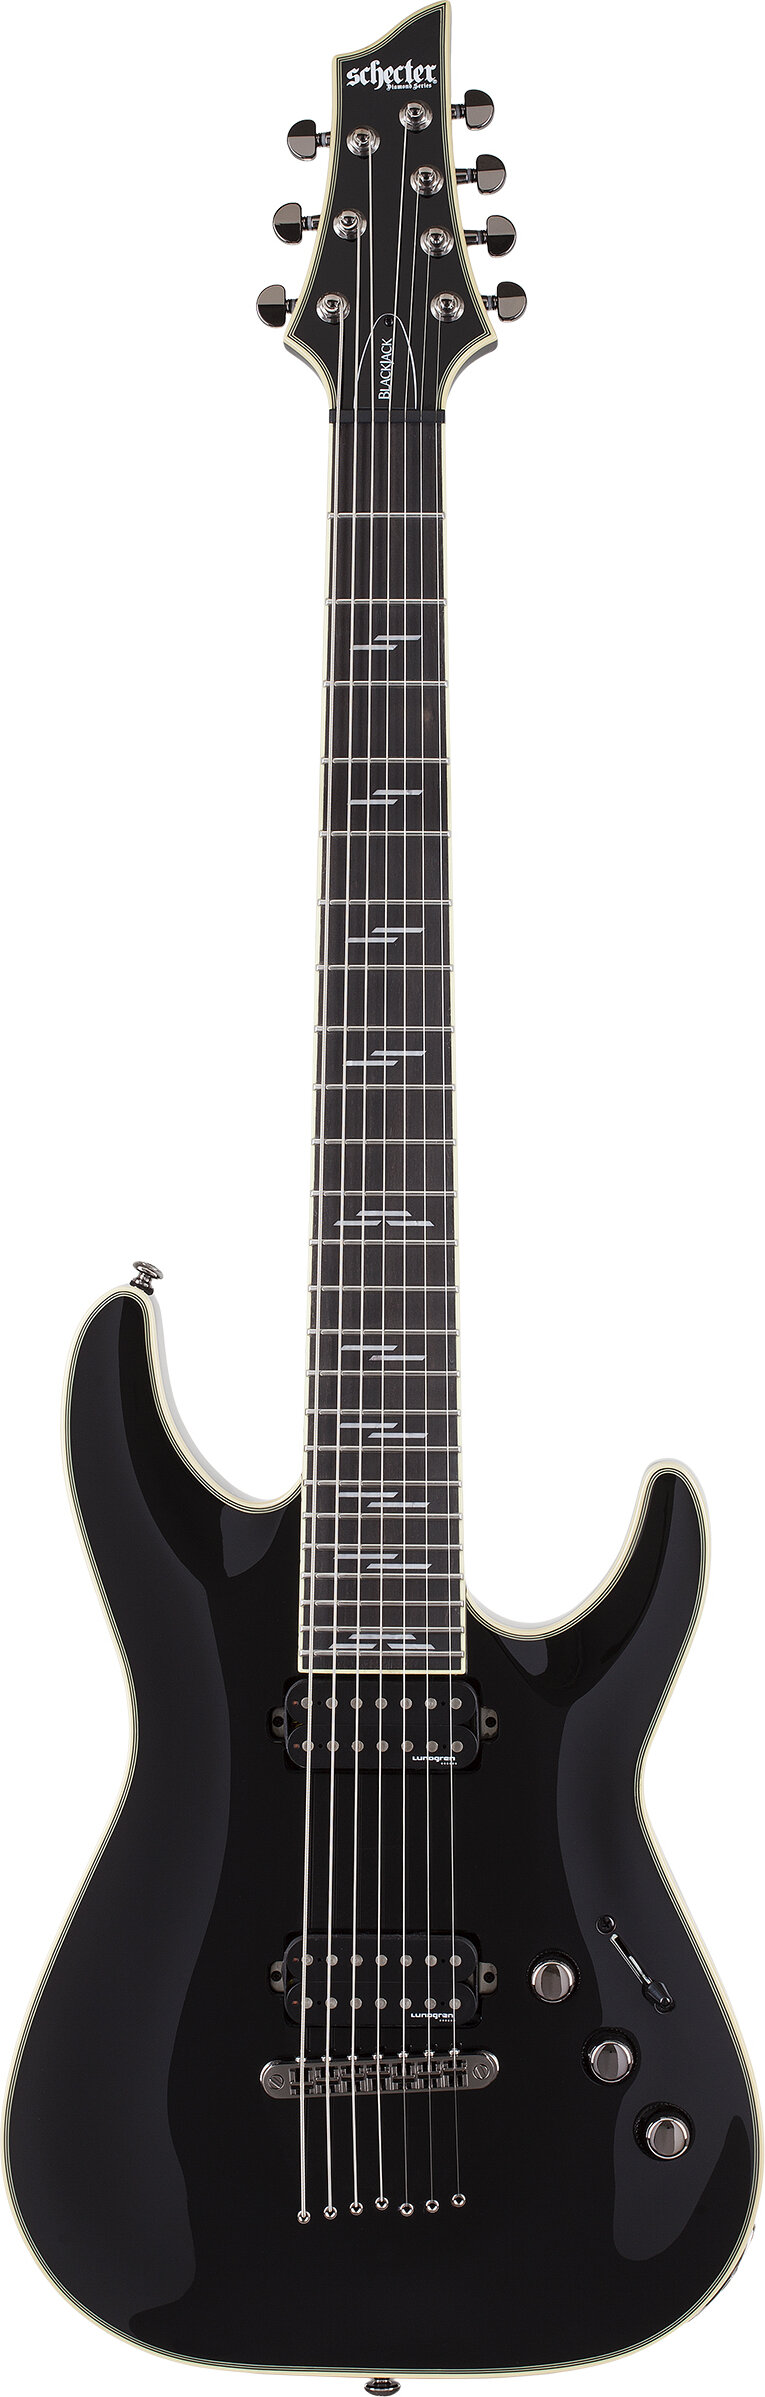 Schecter C-7 Blackjack Electric Guitar Gloss Black -  2564